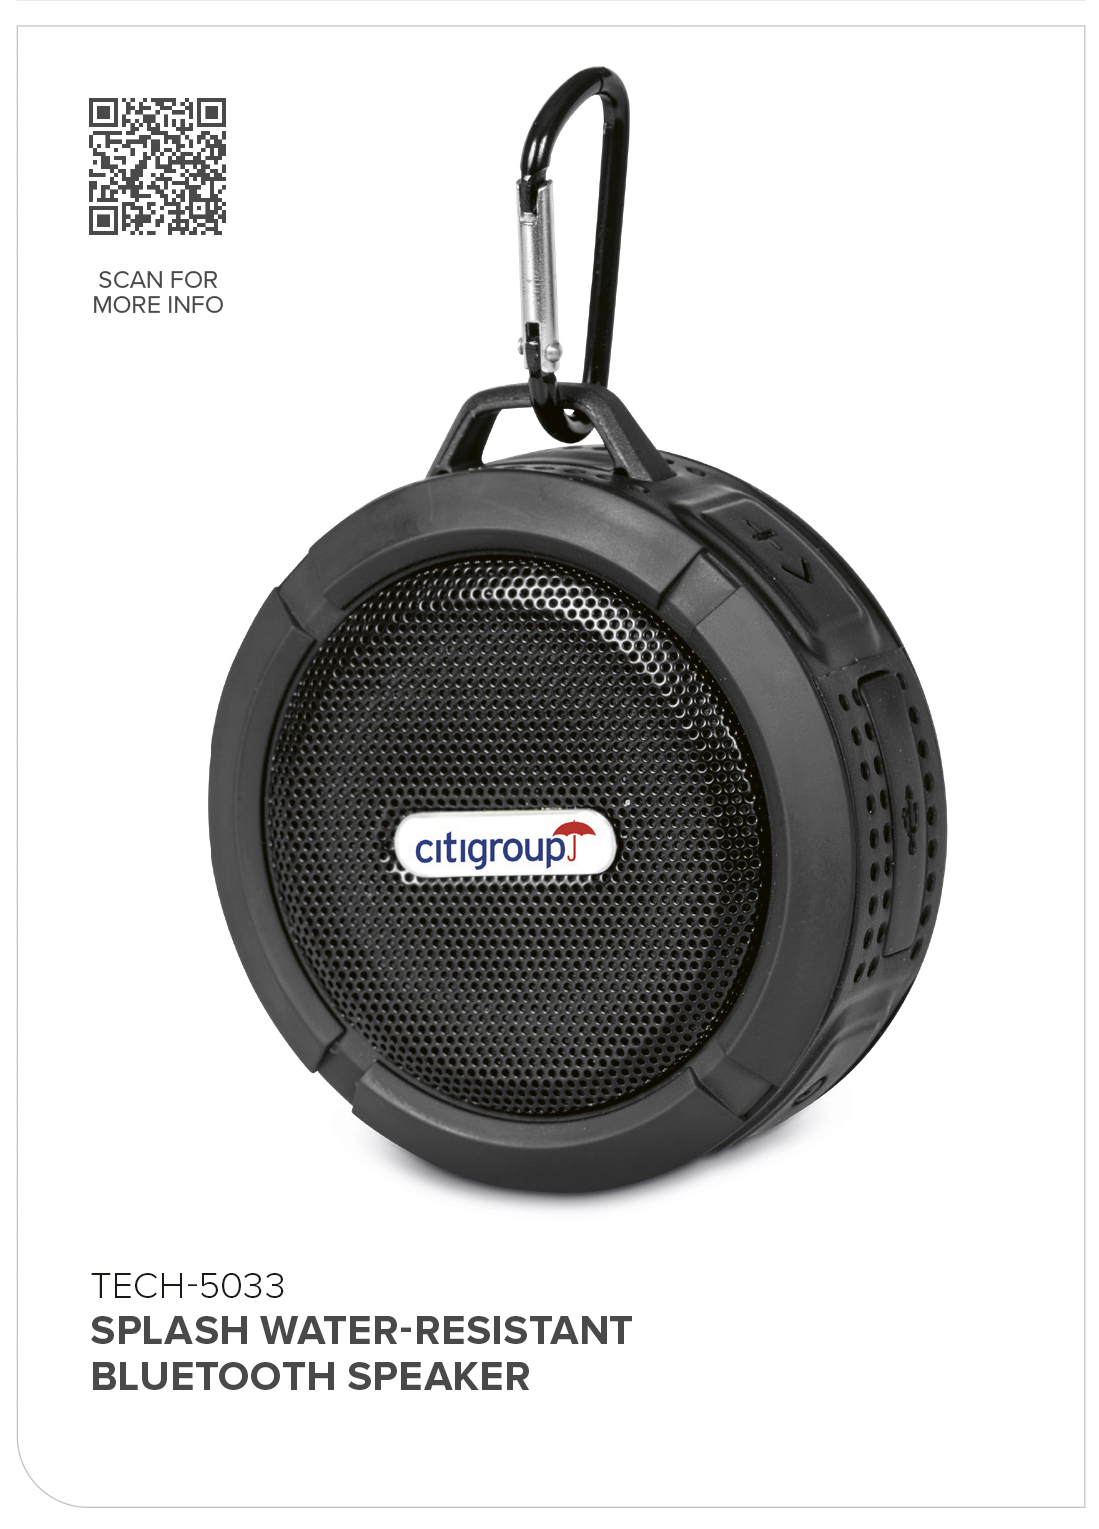 TECH-5033 - Splash Water-Resistant Bluetooth Speaker - Catalogue Image